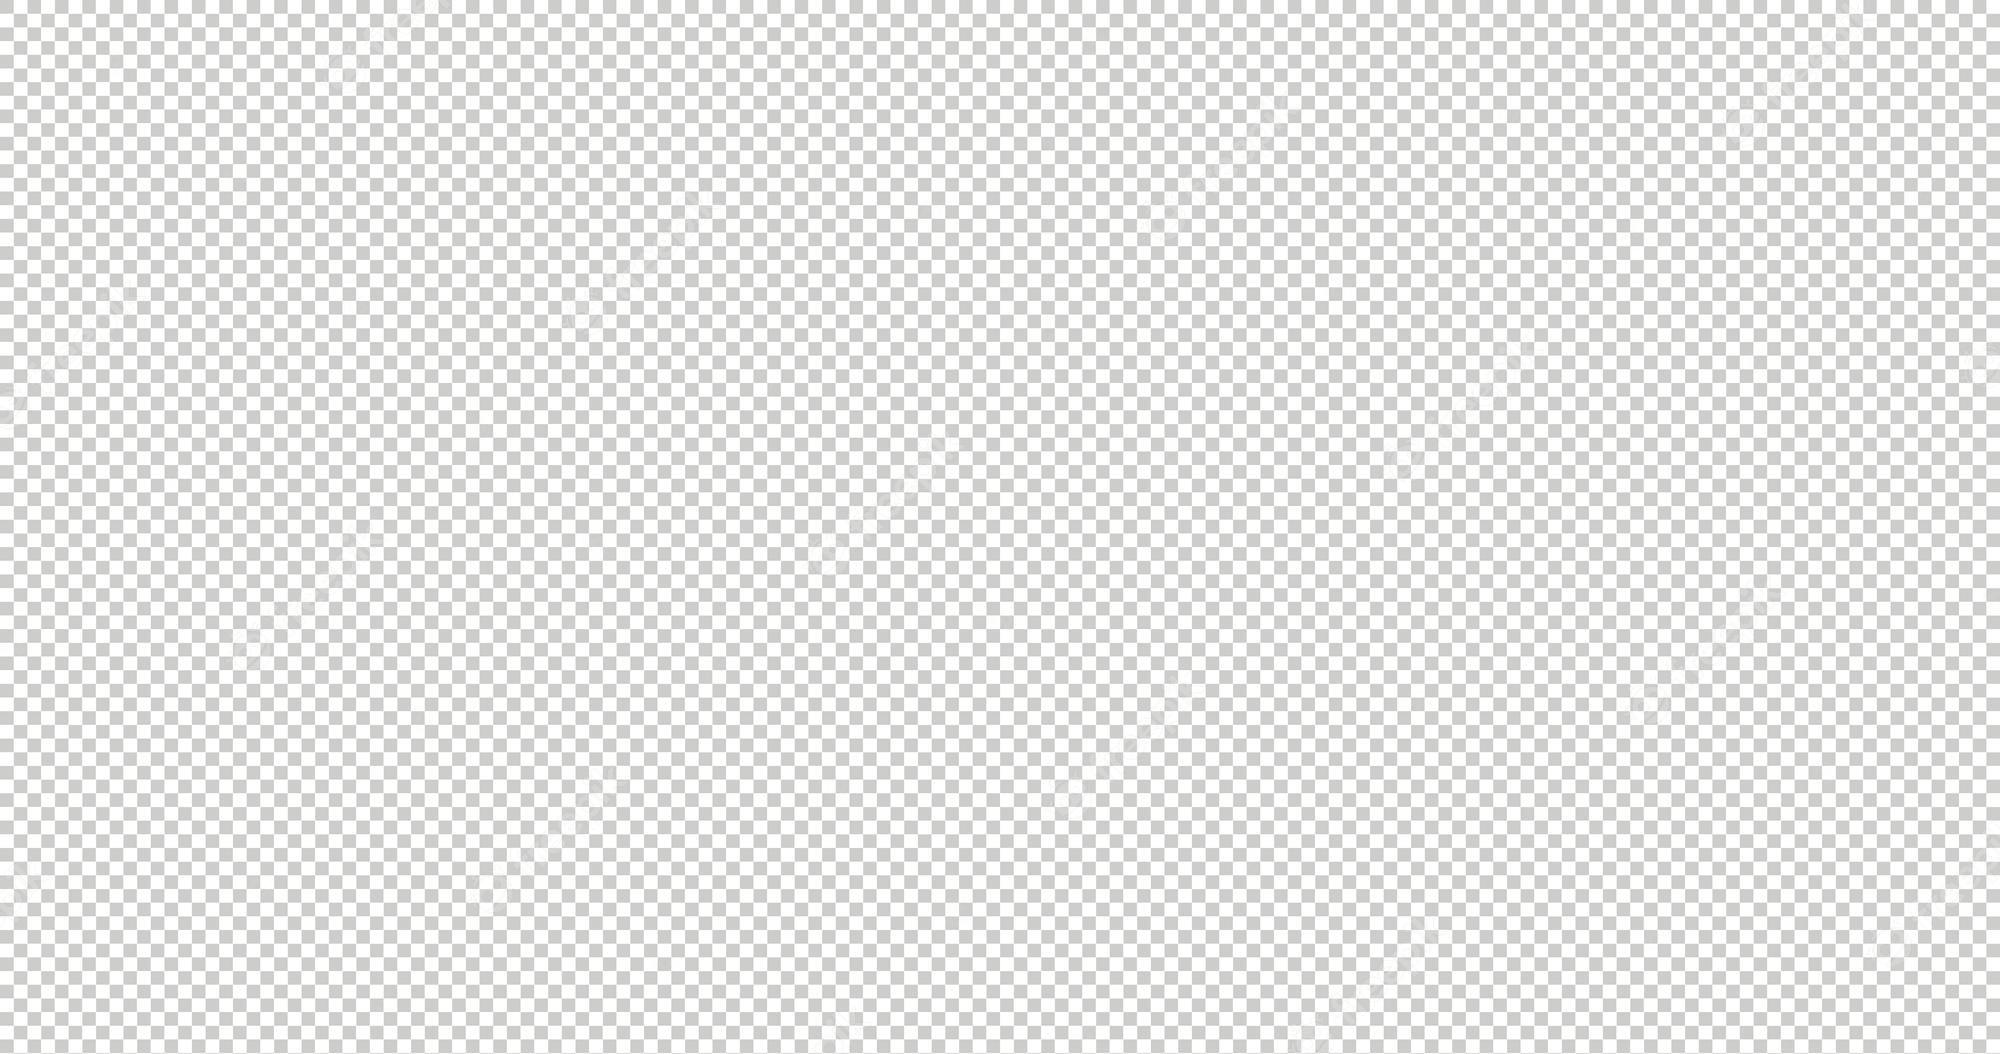 Premium Psd Transparent Background Checkered Wallpaper